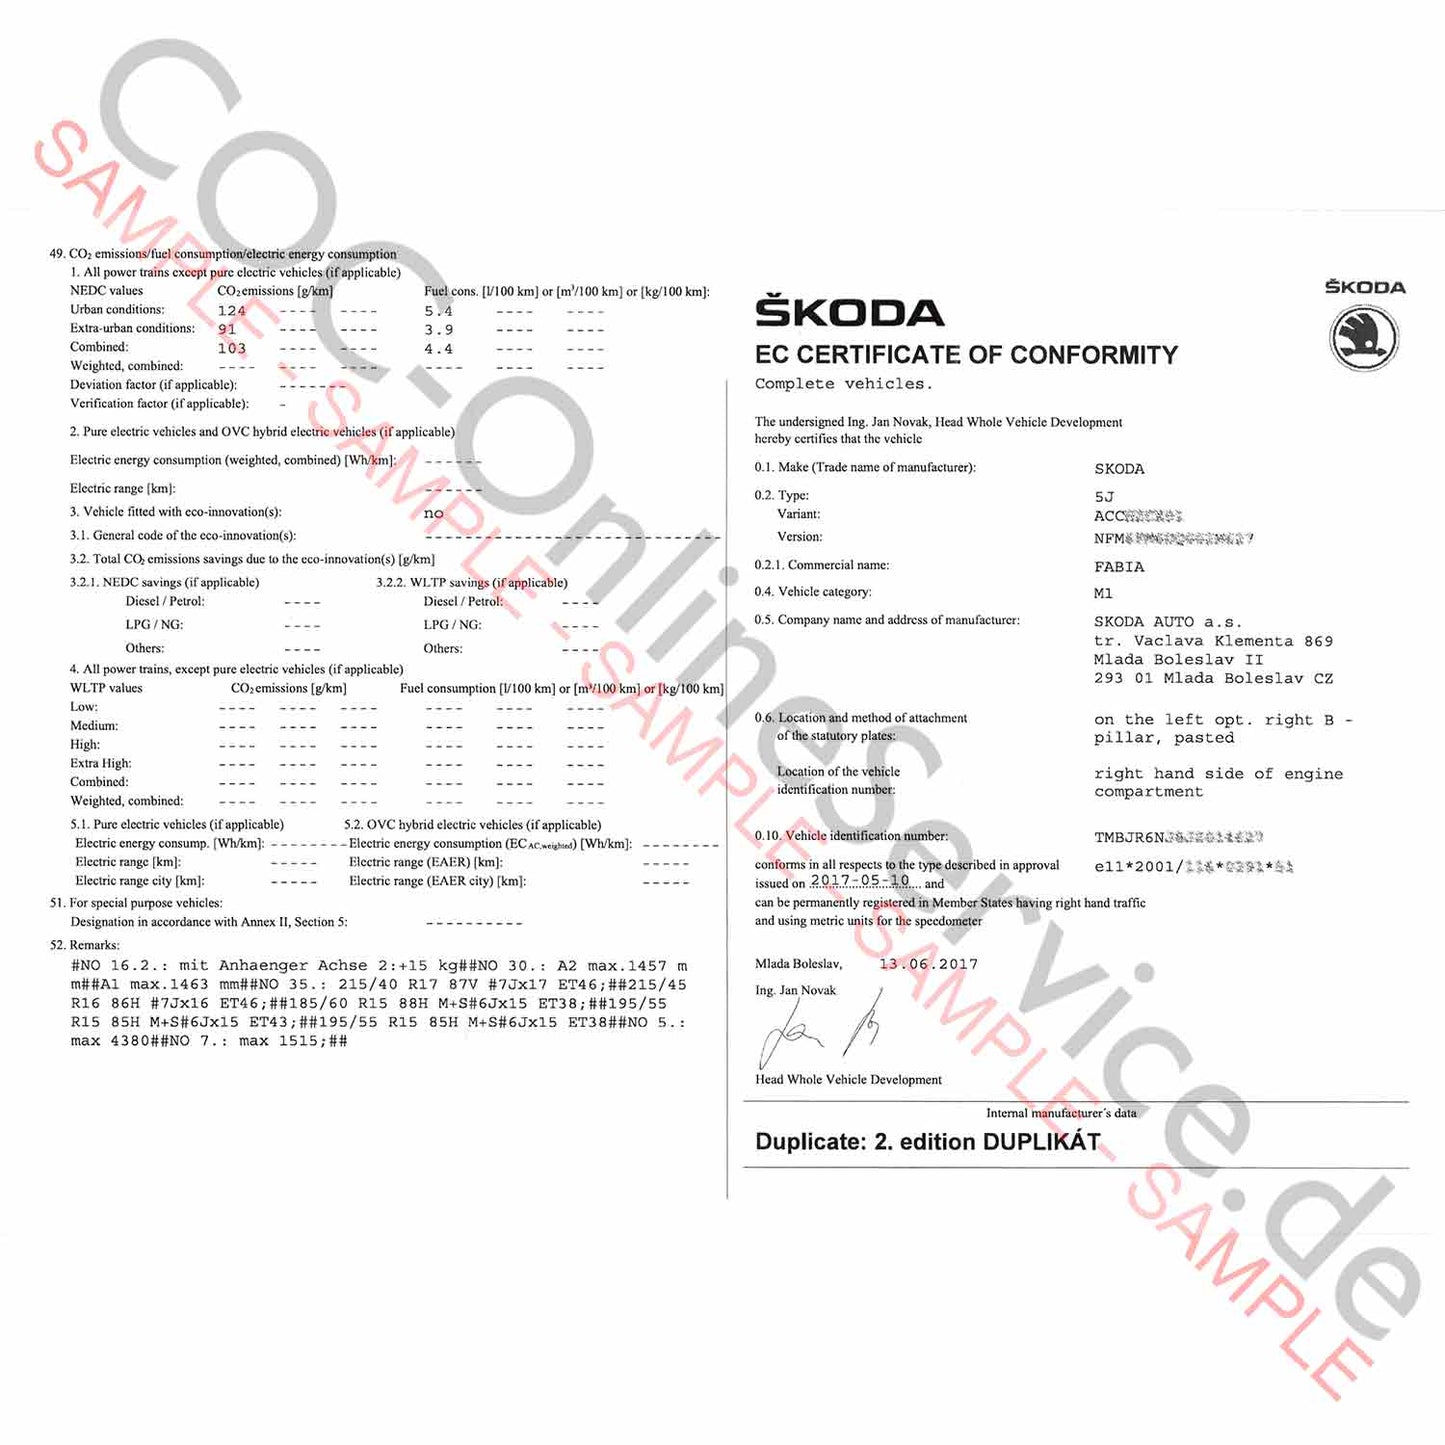 COC Papiere für Skoda (Certificate of Conformity)